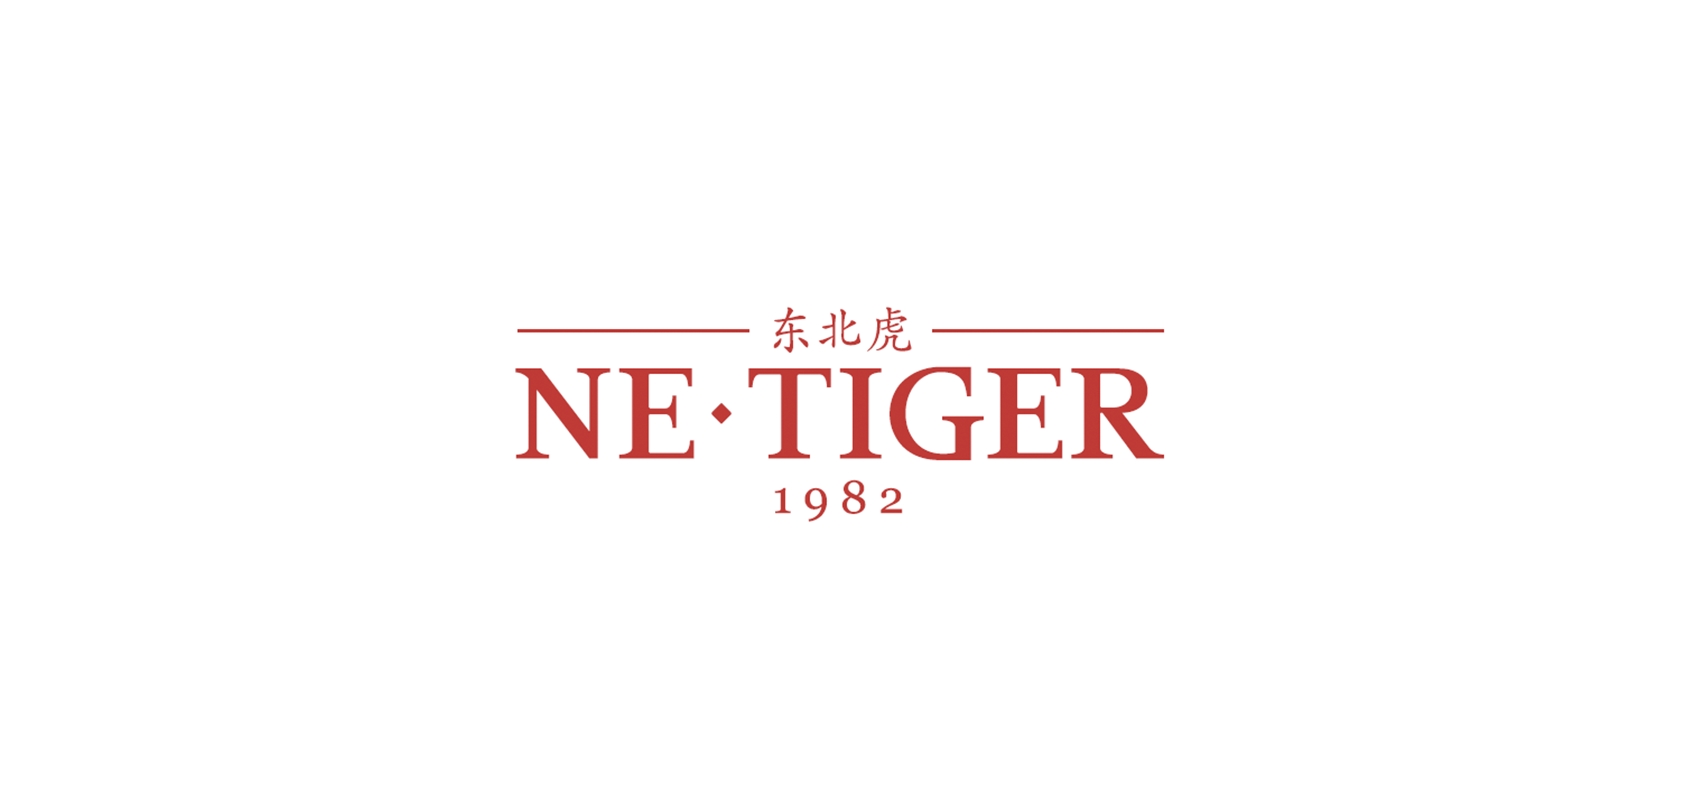 netiger是什么牌子_netiger品牌怎么样?